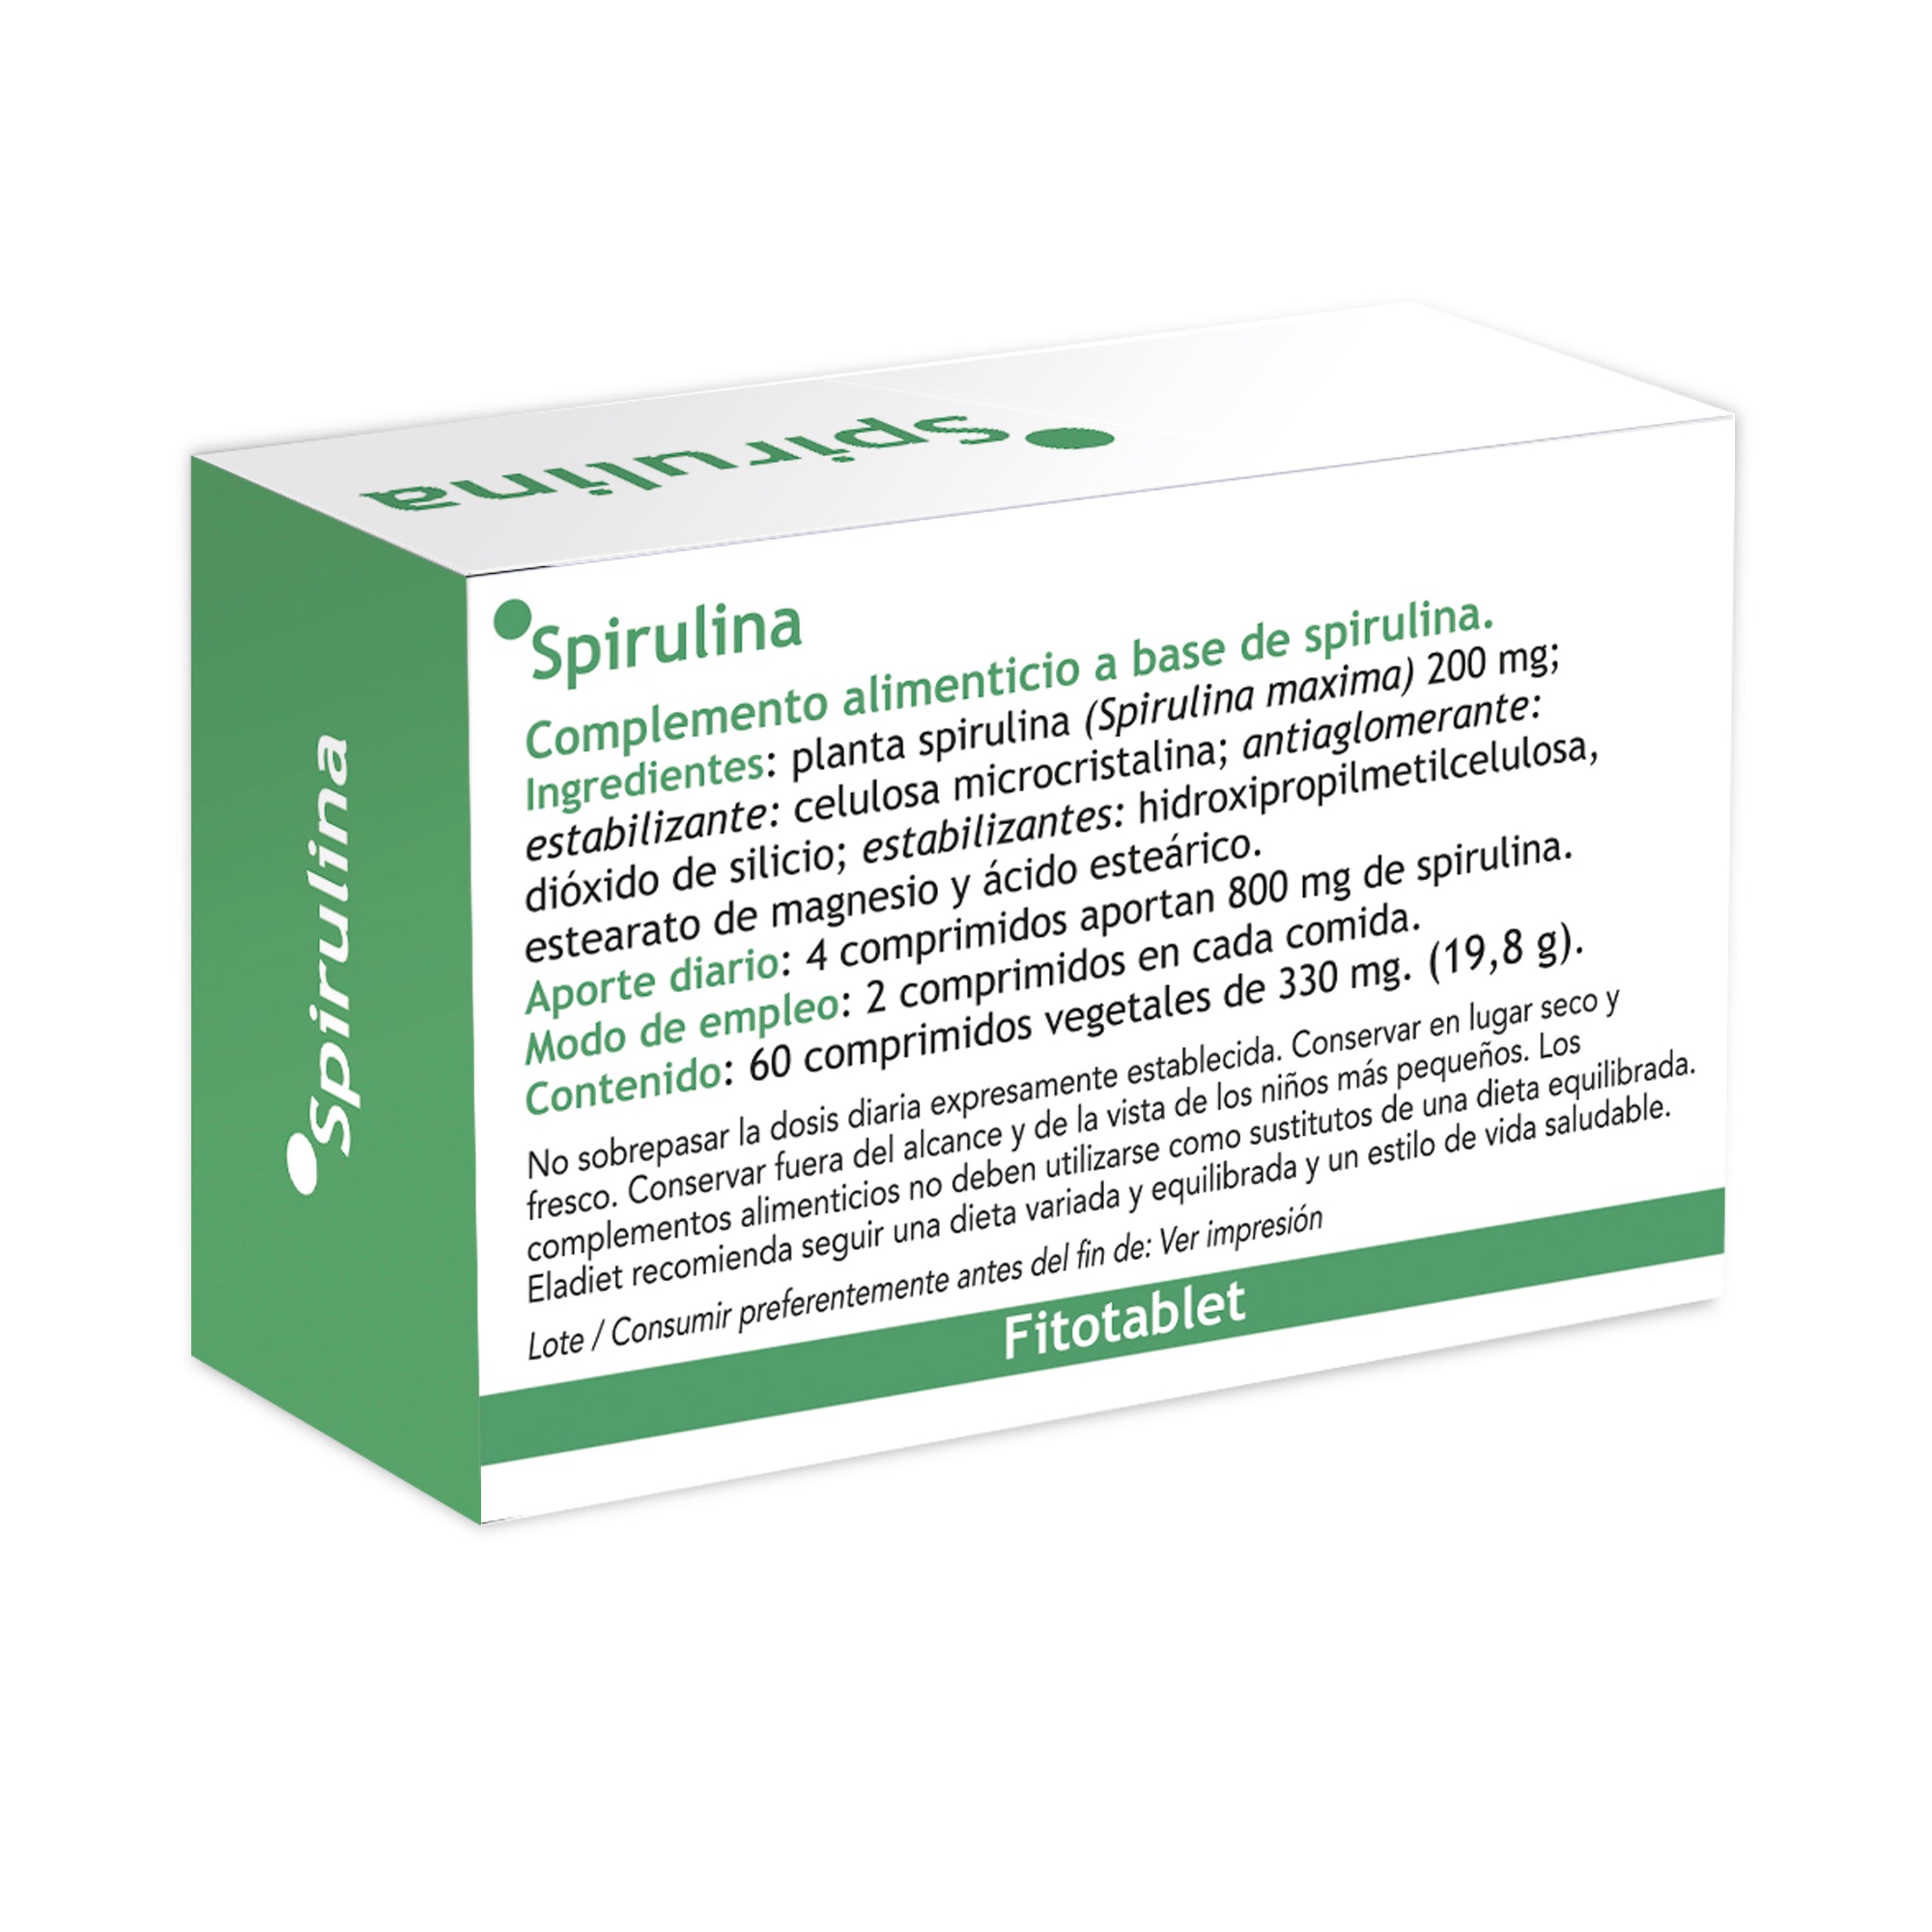 Eladiet - Fitotablet Spirulina 330Mg 60 Comprimidos - Biopharmacia, Parafarmacia online